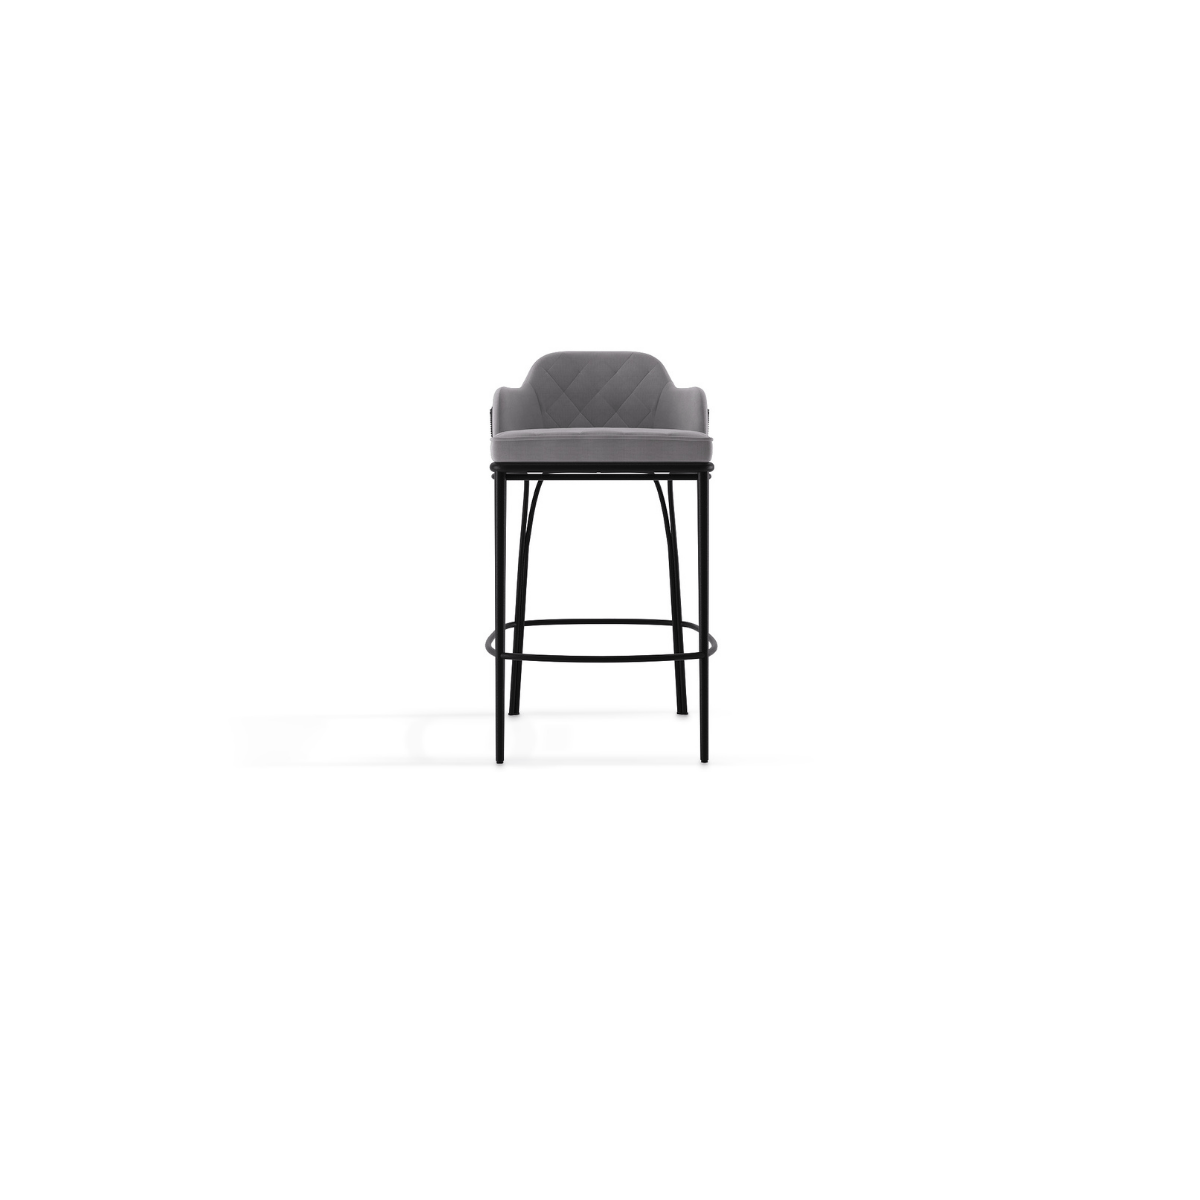 luxxu outdoor charla grey bar chair 01 Charla Grey Bar Chair